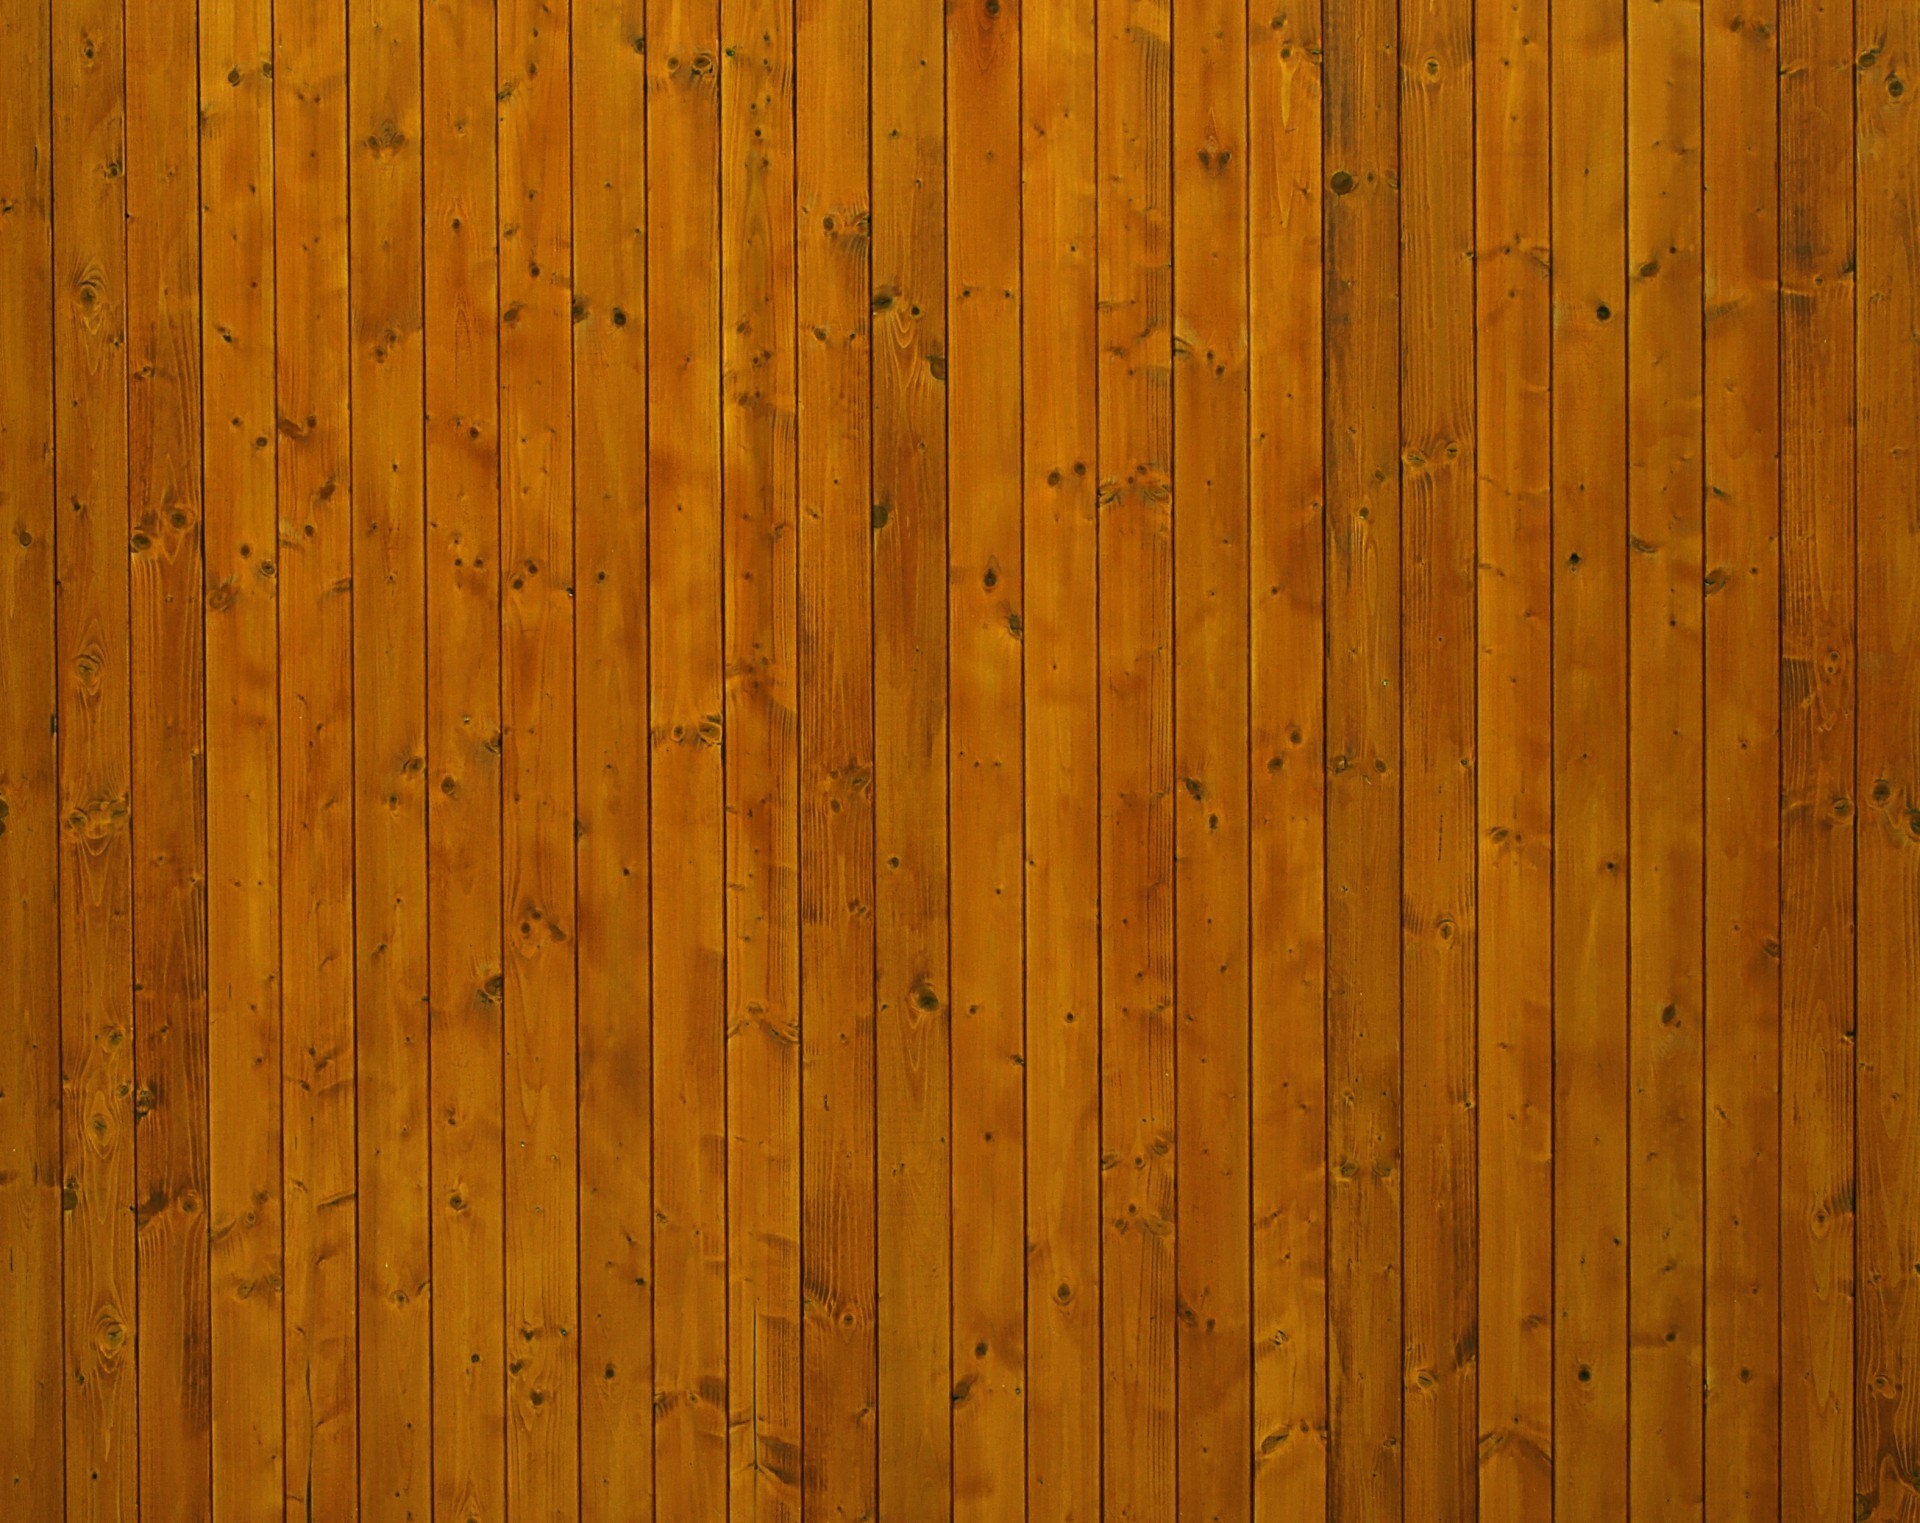 1920x1523 ... lumber, door, surface, background, hardwood, wooden, wallpaper,  backboard, wood flooring, man made object, laminate flooring, wood stain,  floor area, ...